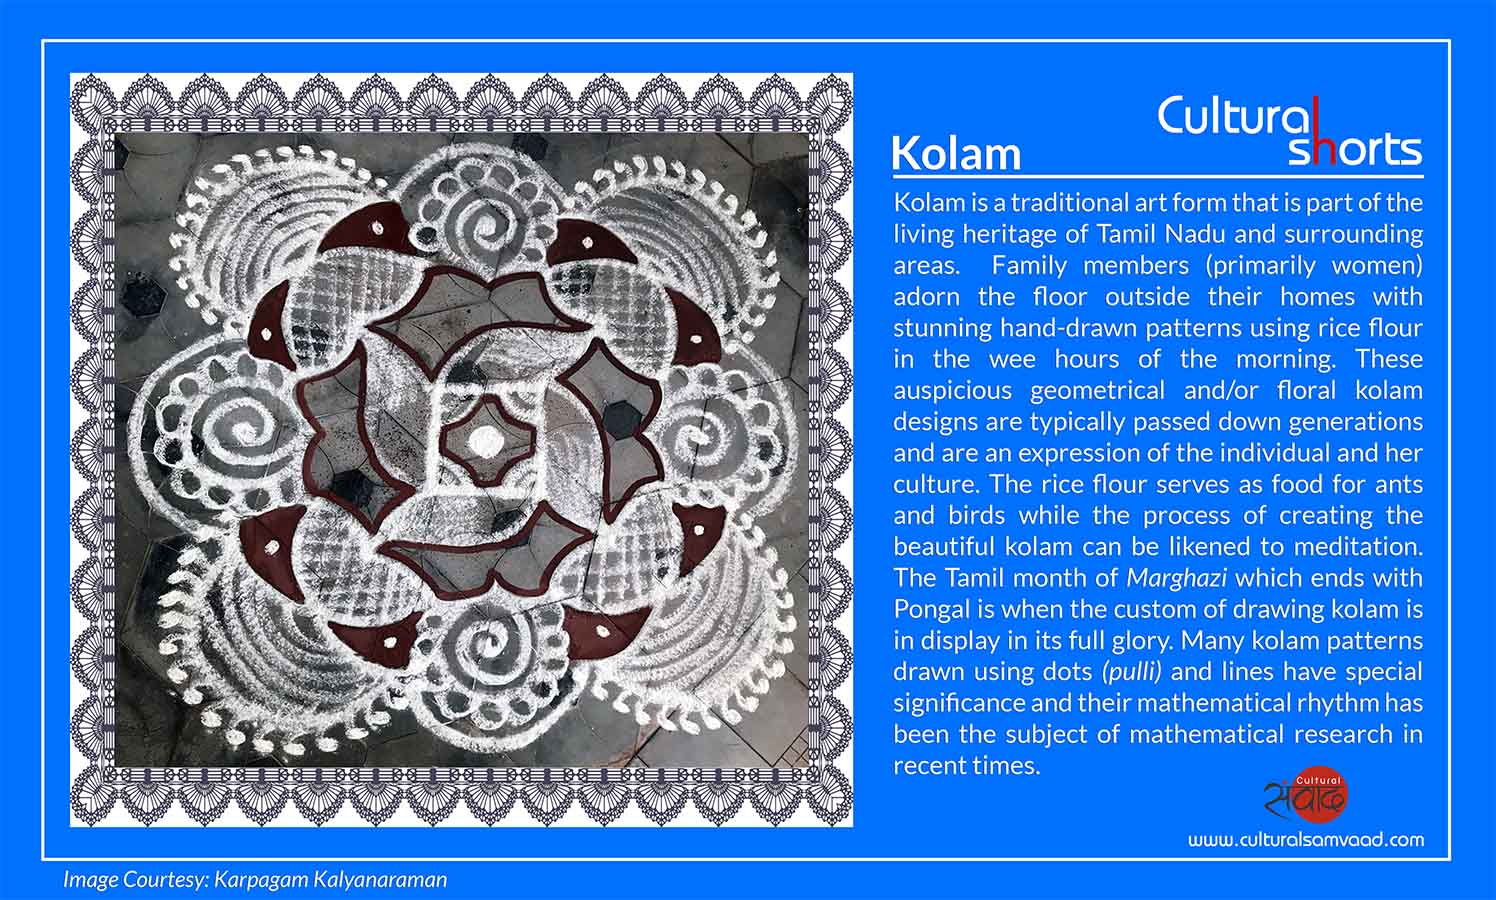 What is Kolam